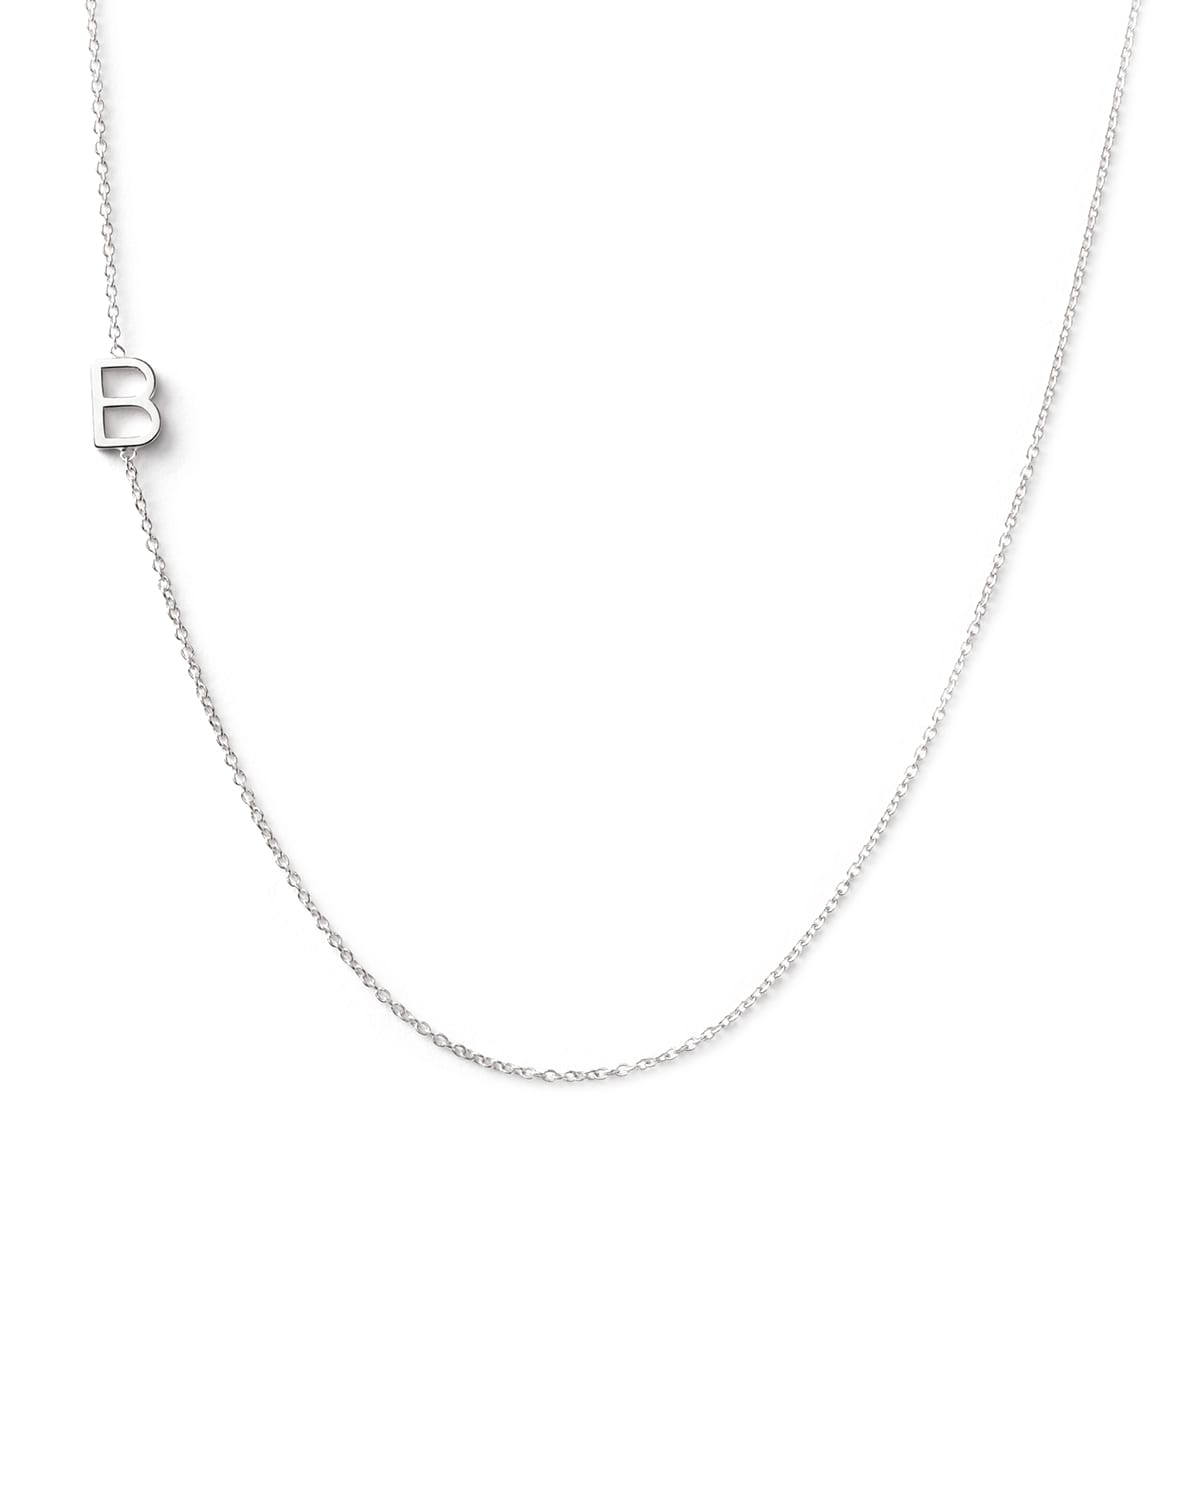 Maya Brenner Designs 14k White Gold Mini Letter Necklace In B